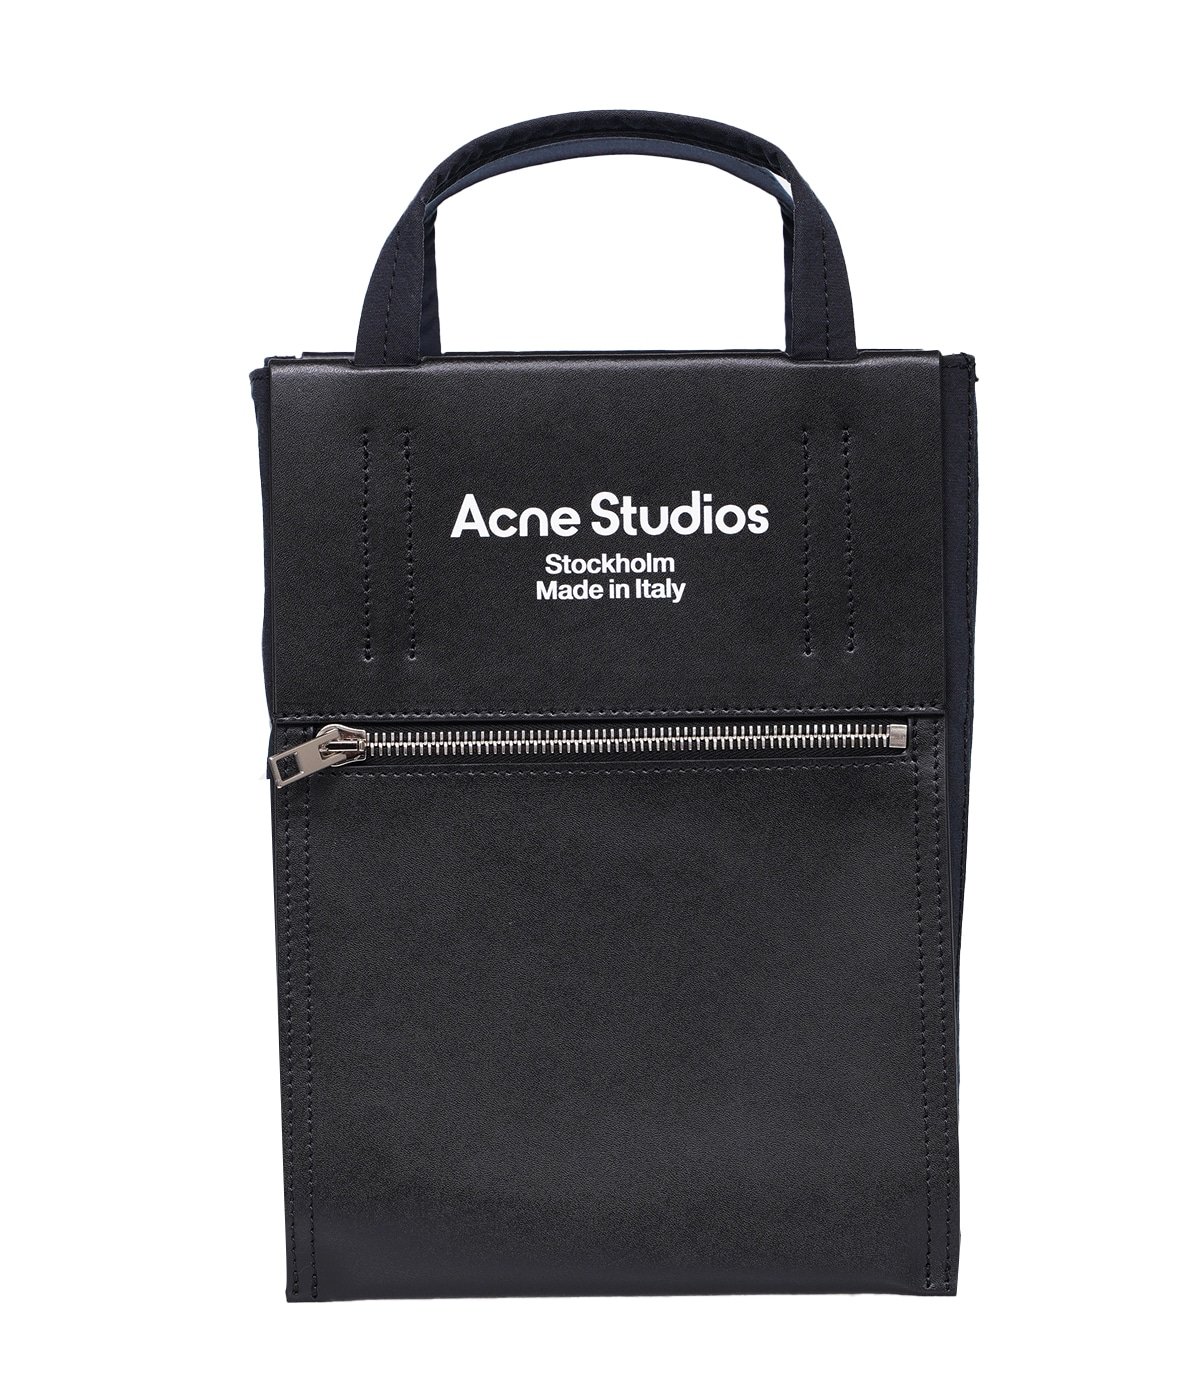 Acne Studios(アクネストゥディオズ) FN-UX-BAGS000048 / バッグ 